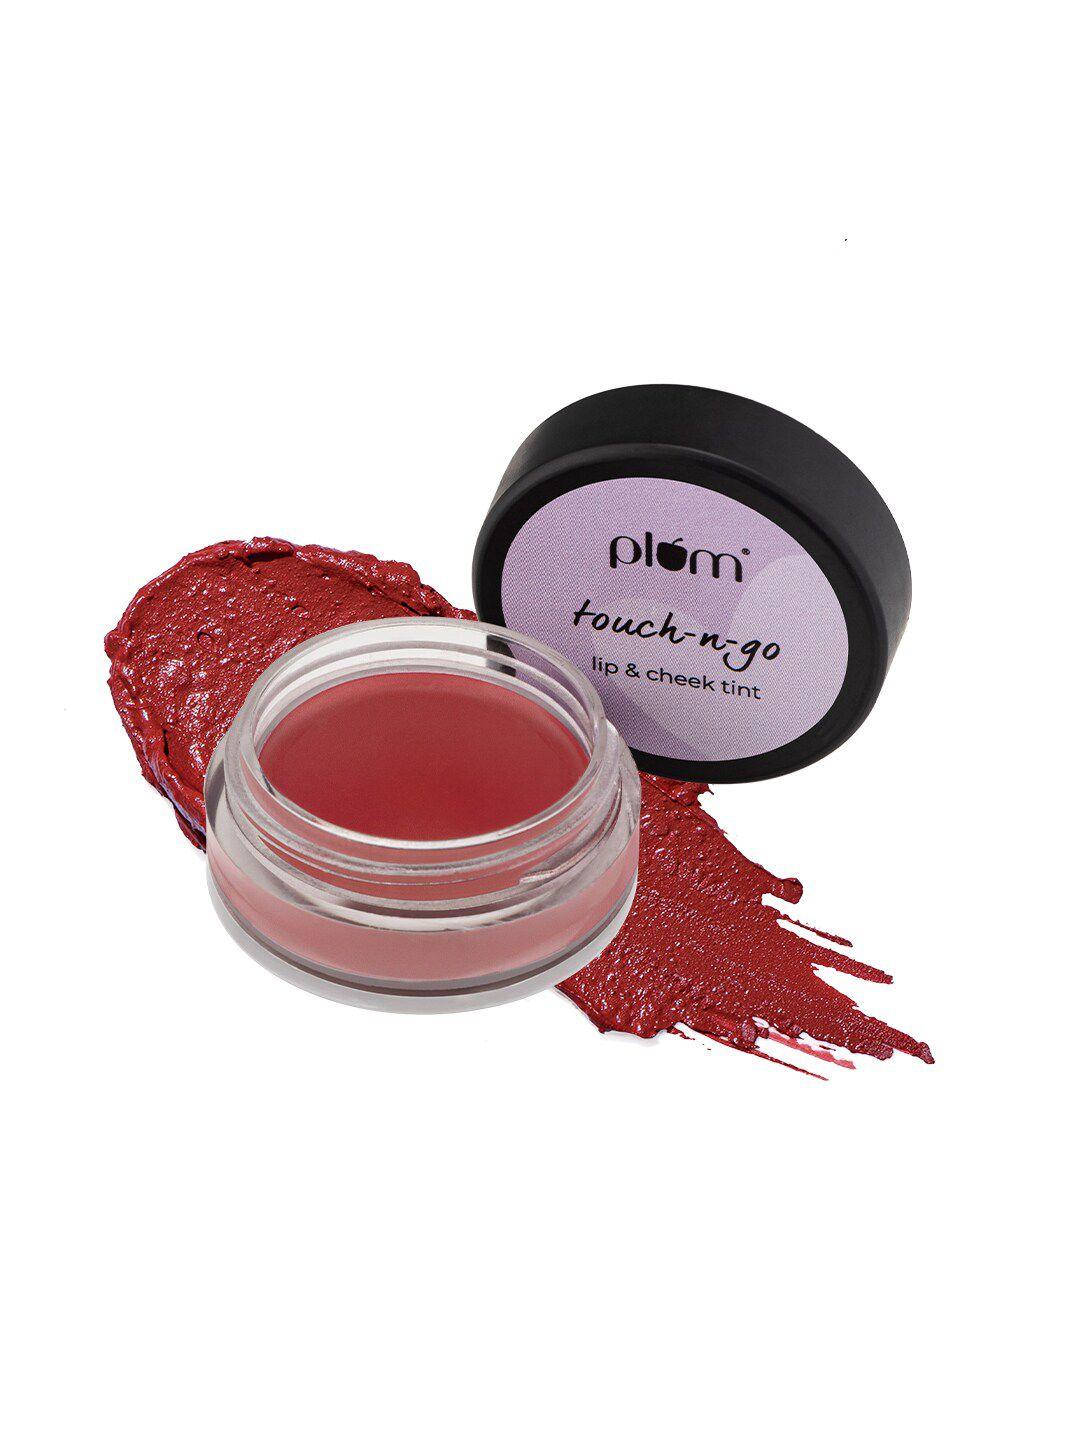 plum highly pigmented touch-n-go lip & cheek tint, 5g - peachy keen 122